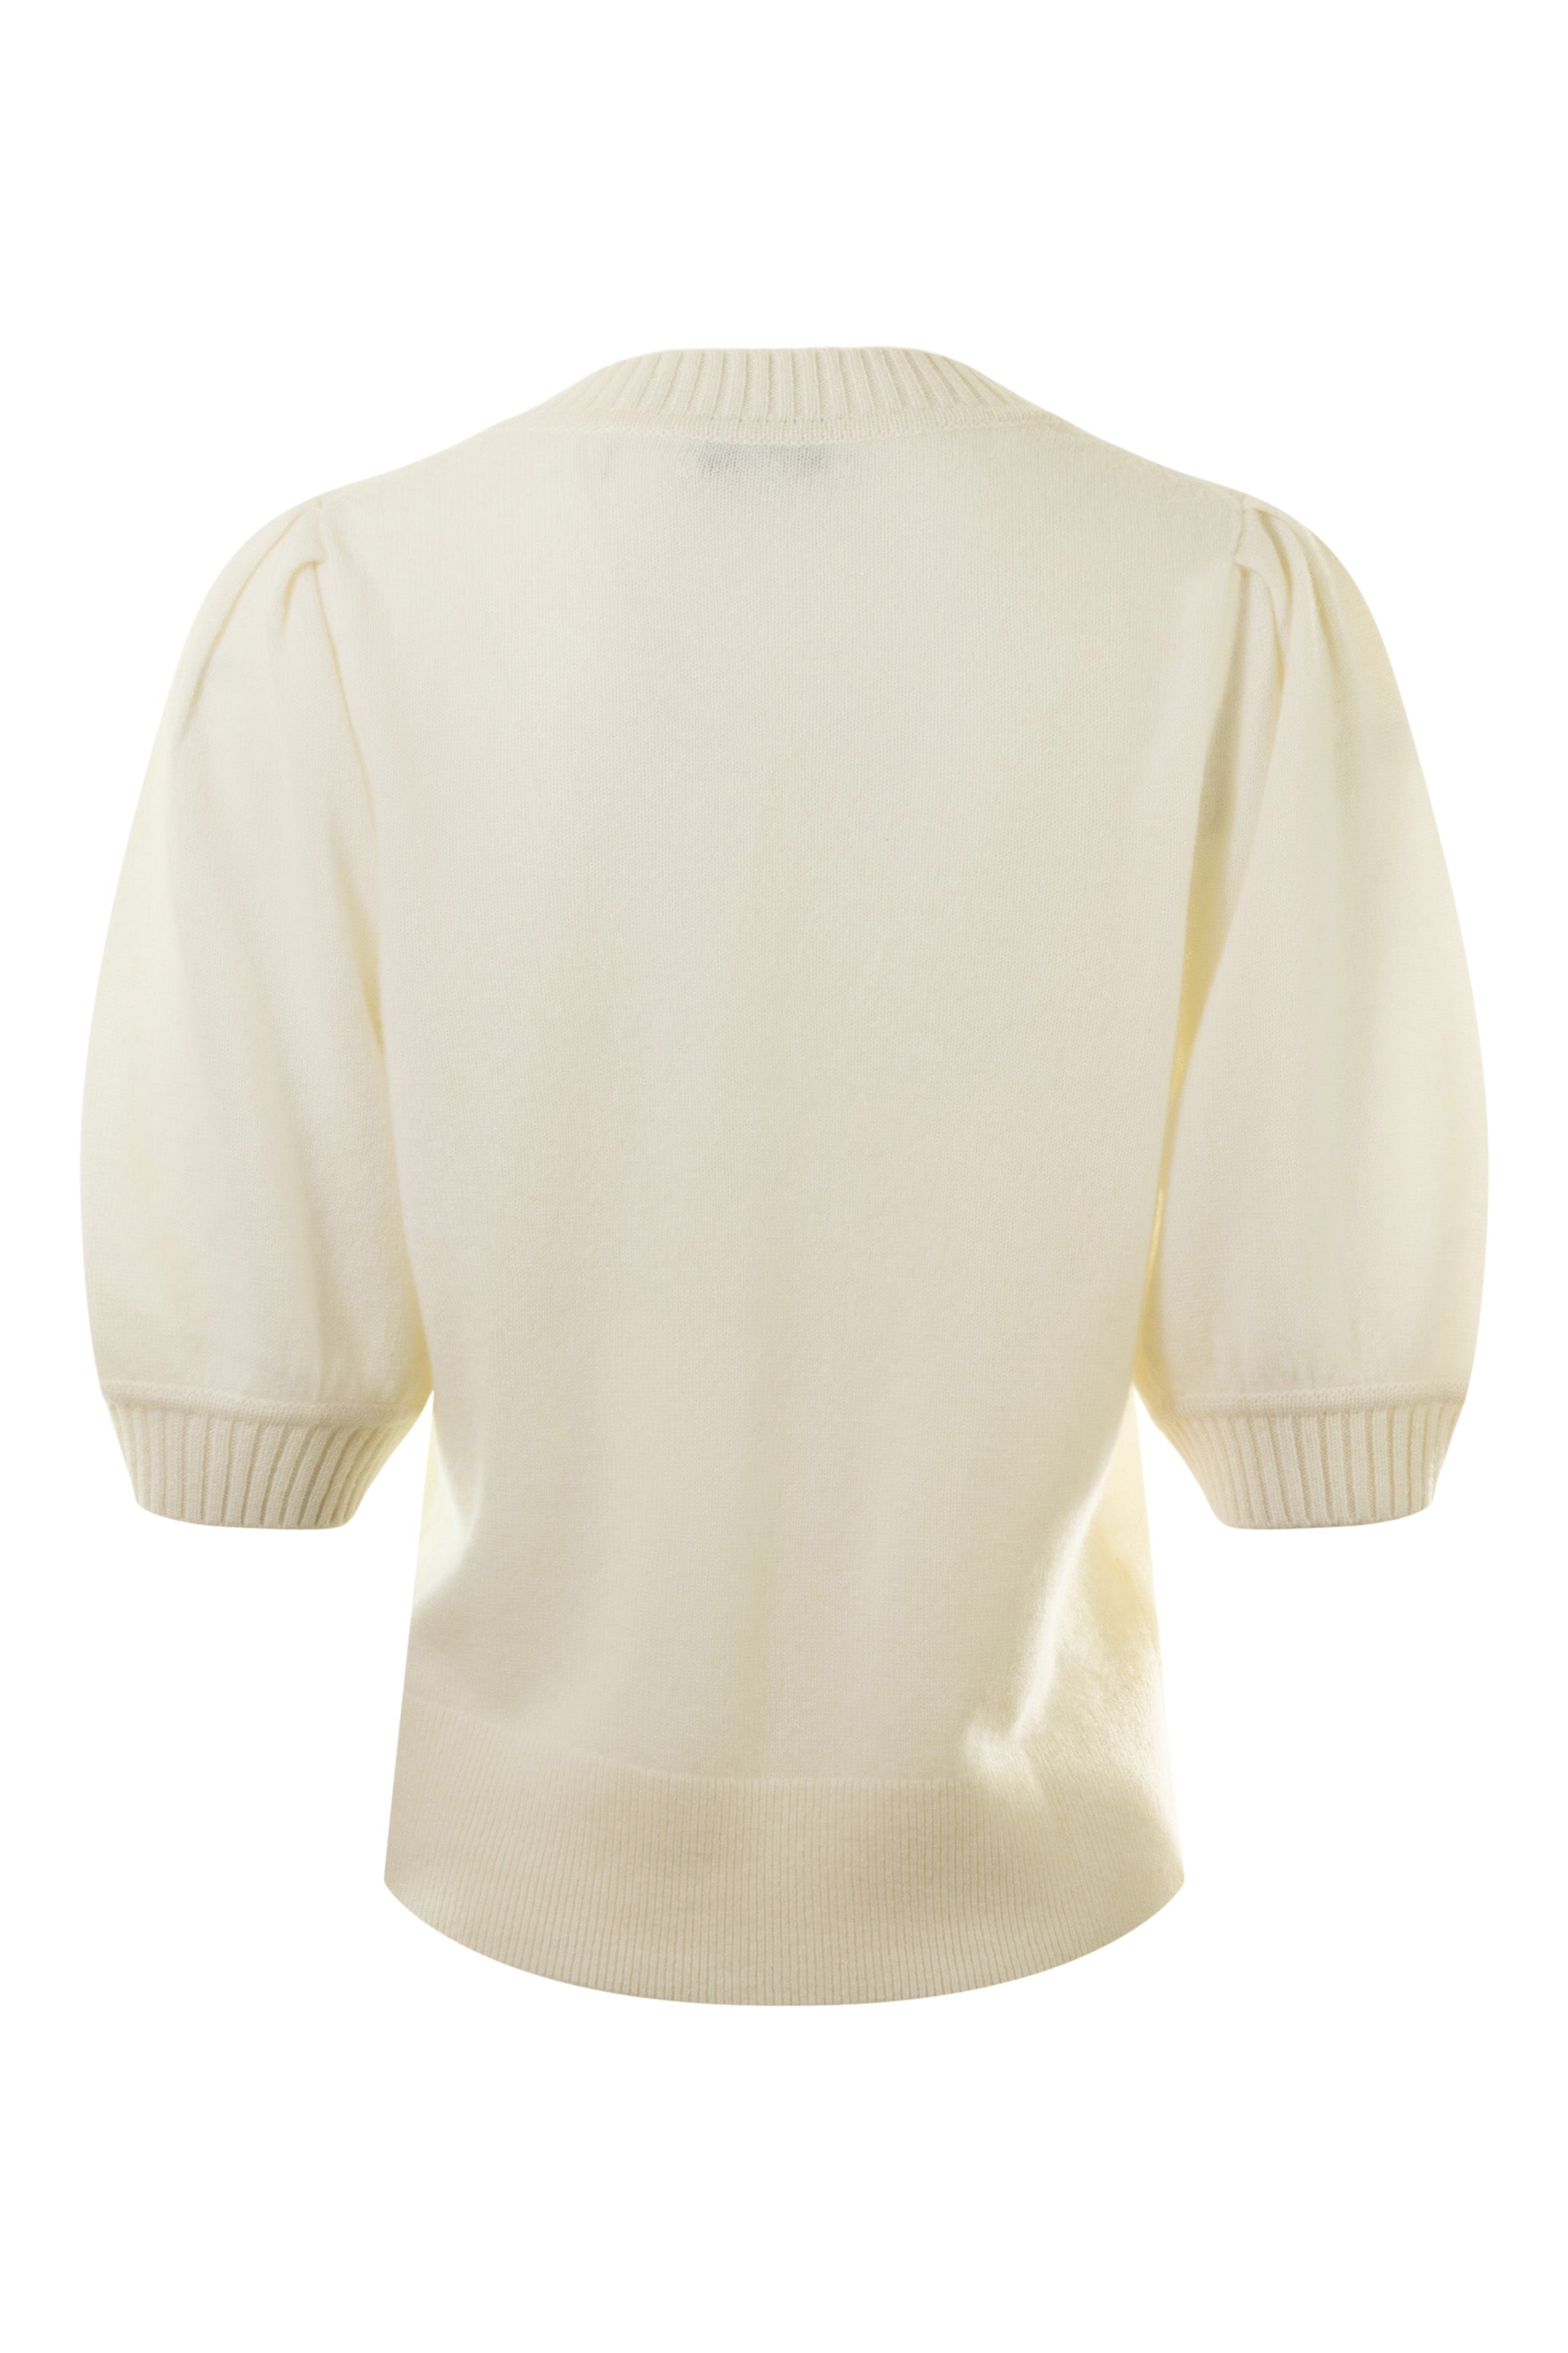 White & Warren Cashmere Puff Sleeve V-neck Sweater in Soft White